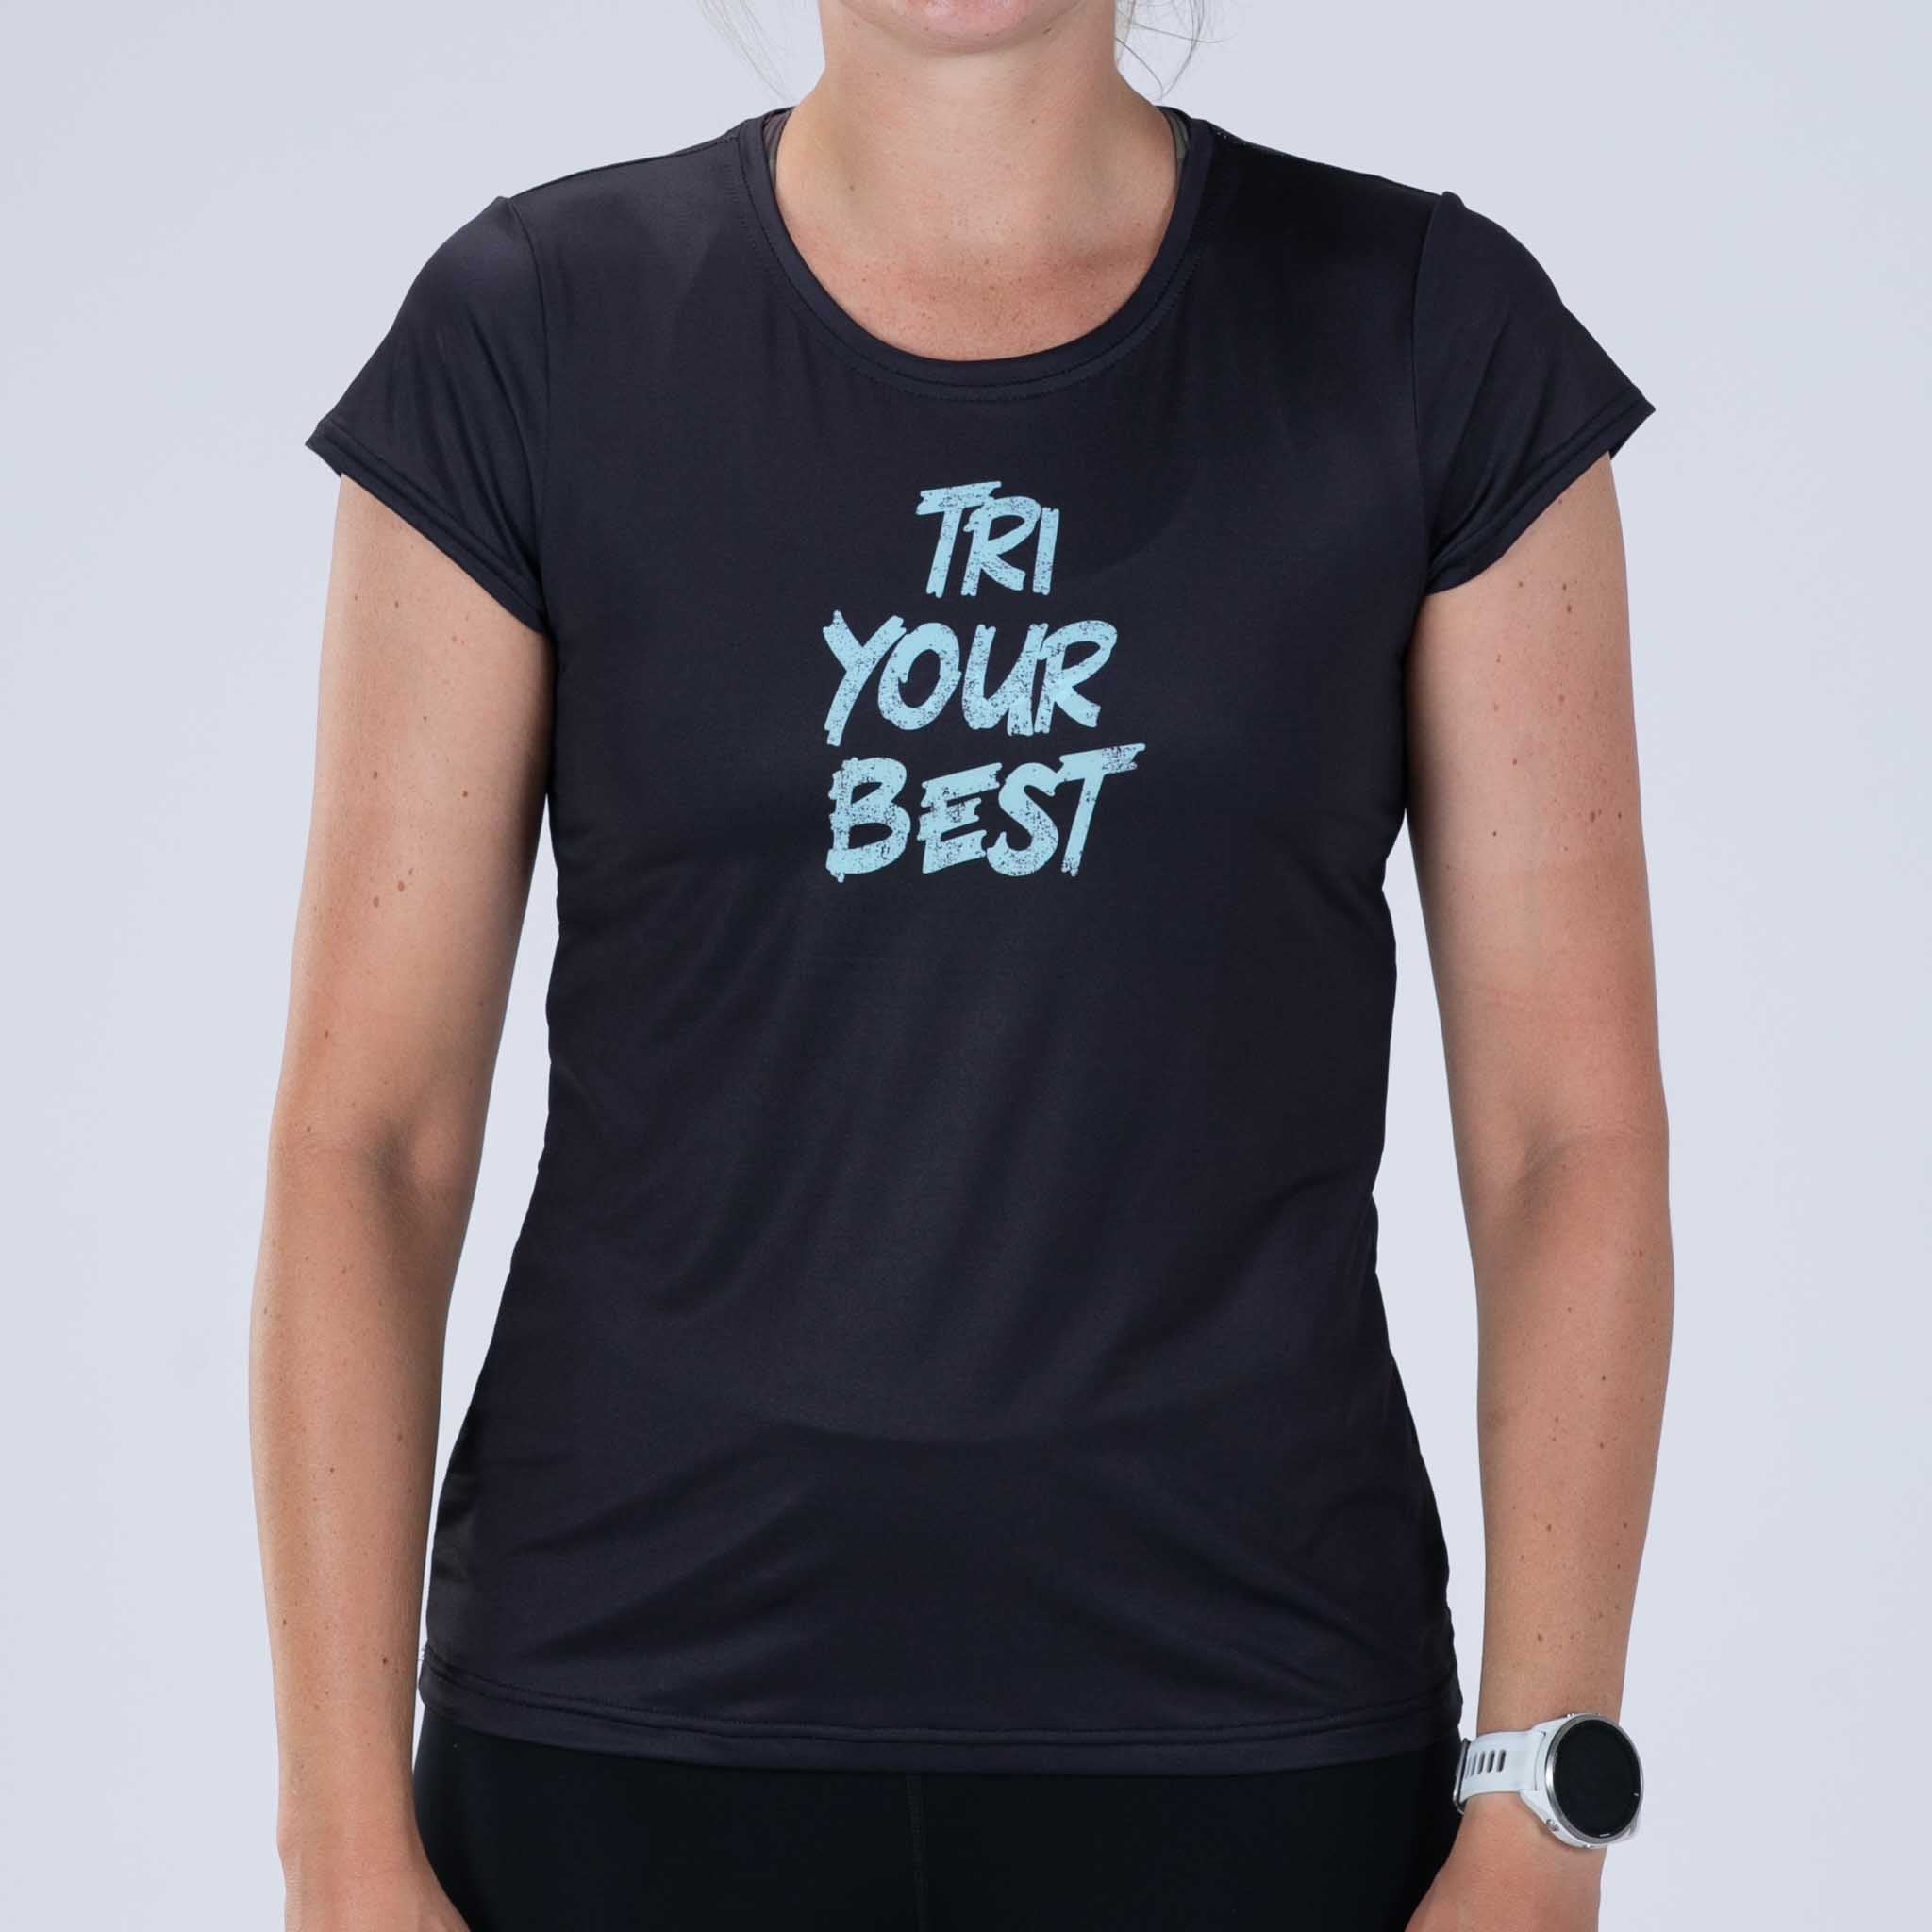 Zoot Sports RUN TEE Women's Ltd Run Tee - Tri Your Best